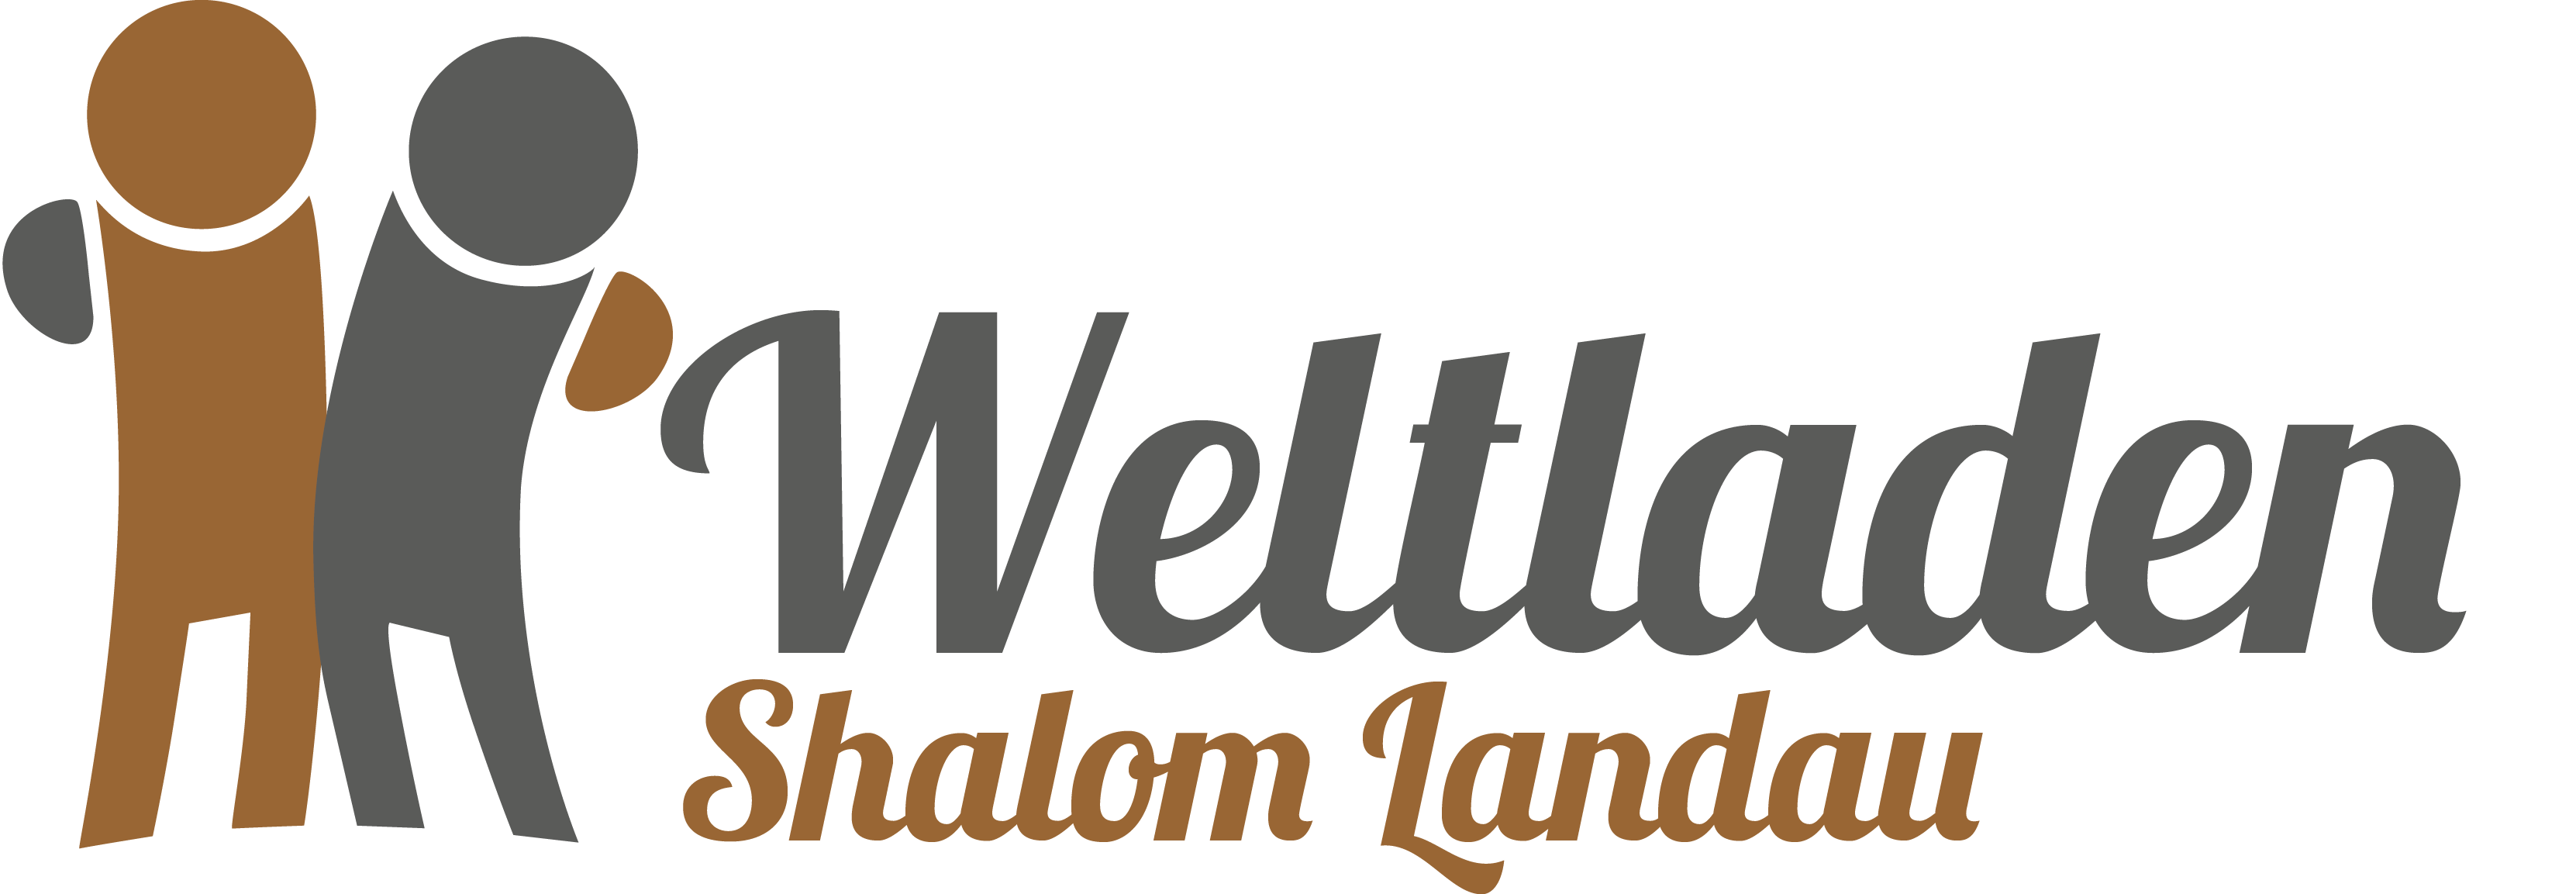 Welt-Laden Shalom Landau a. d. Isar